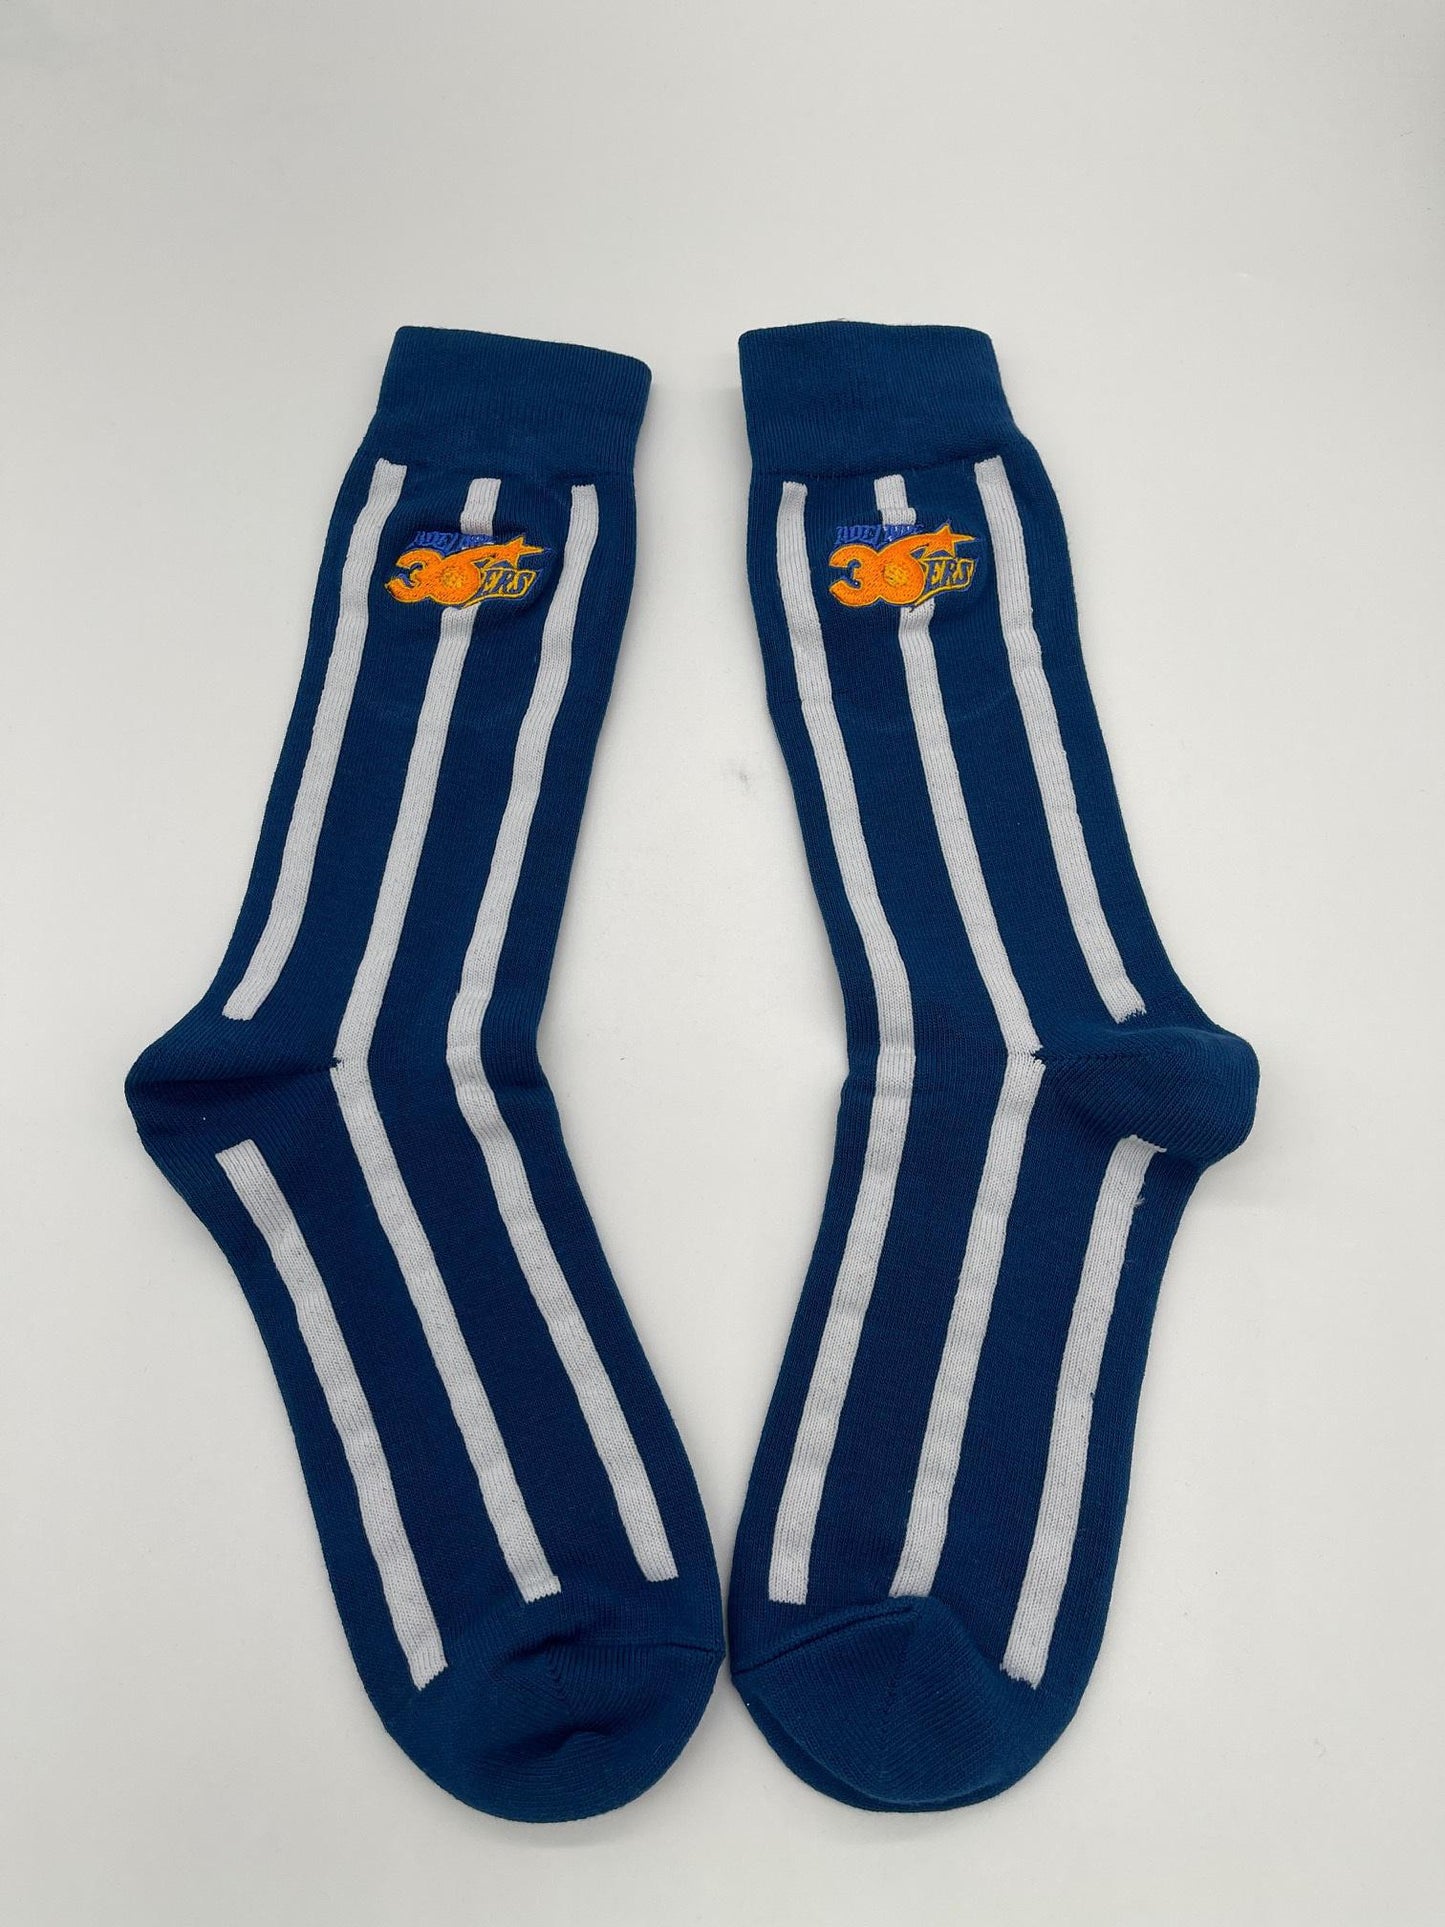 Retro Business Socks